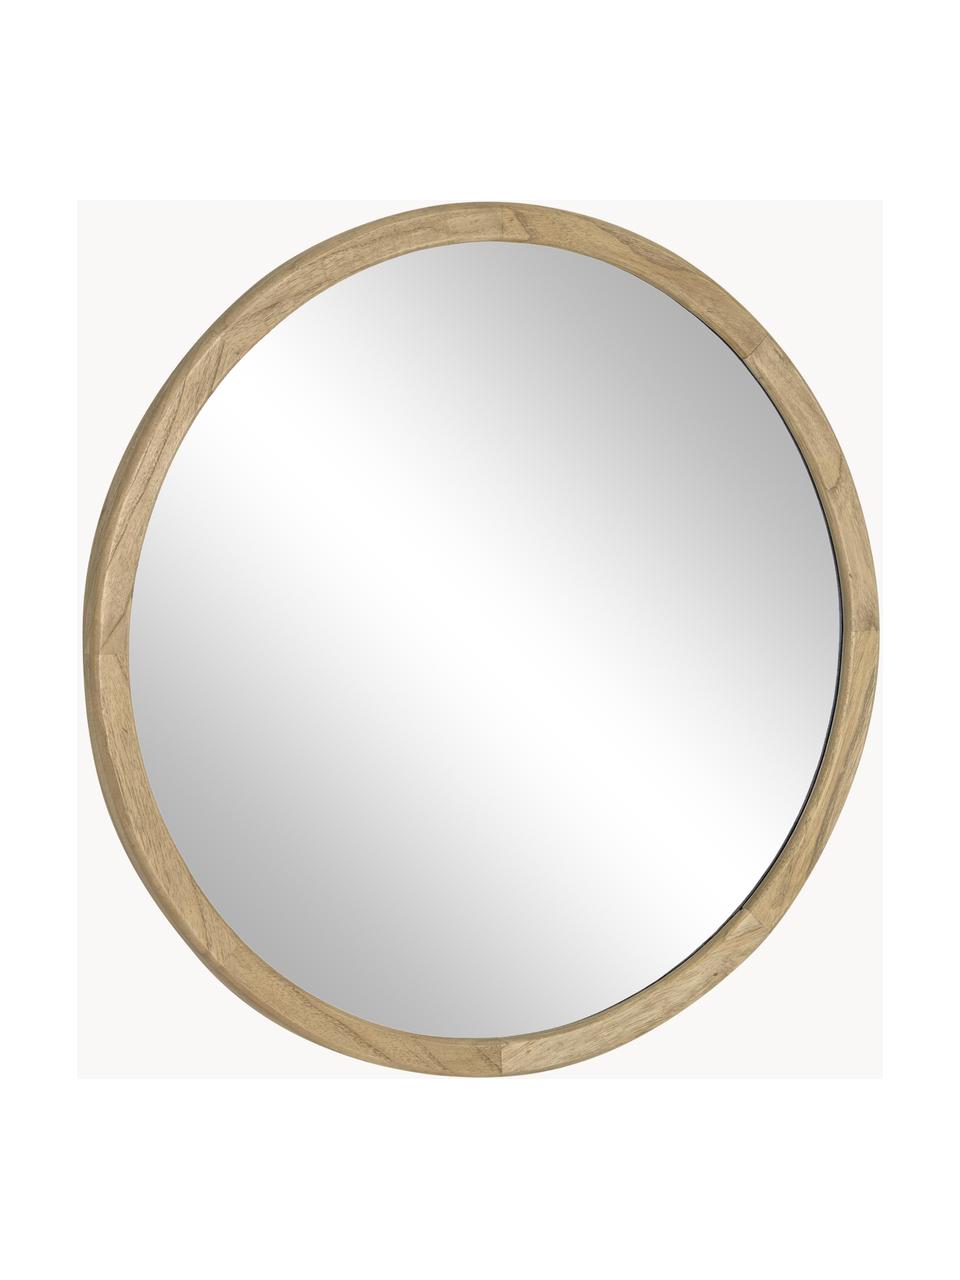 Runder Wandspiegel Alum mit Mindiholzrahmen, Rahmen: Mindiholz, Spiegelfläche: Spiegelglas, Mindiholz, Ø 100 x T 4 cm